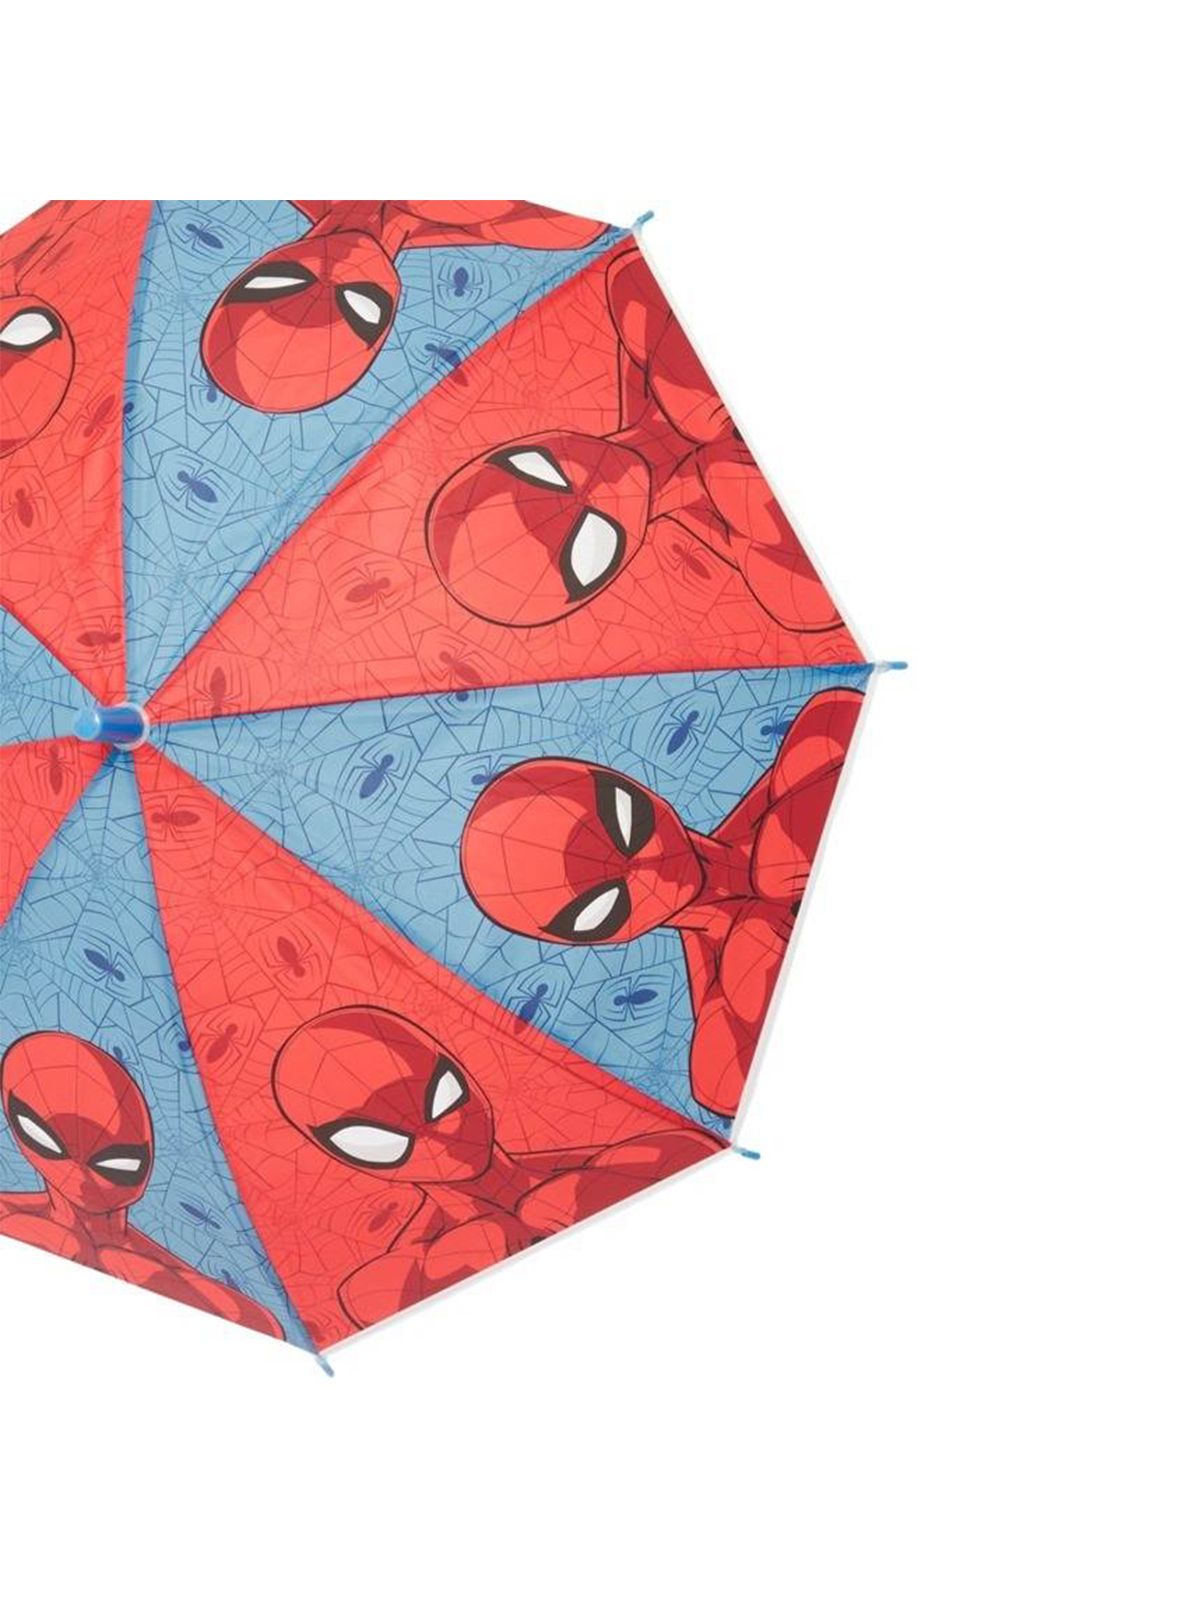 Parapluie Spiderman 69.5 cm